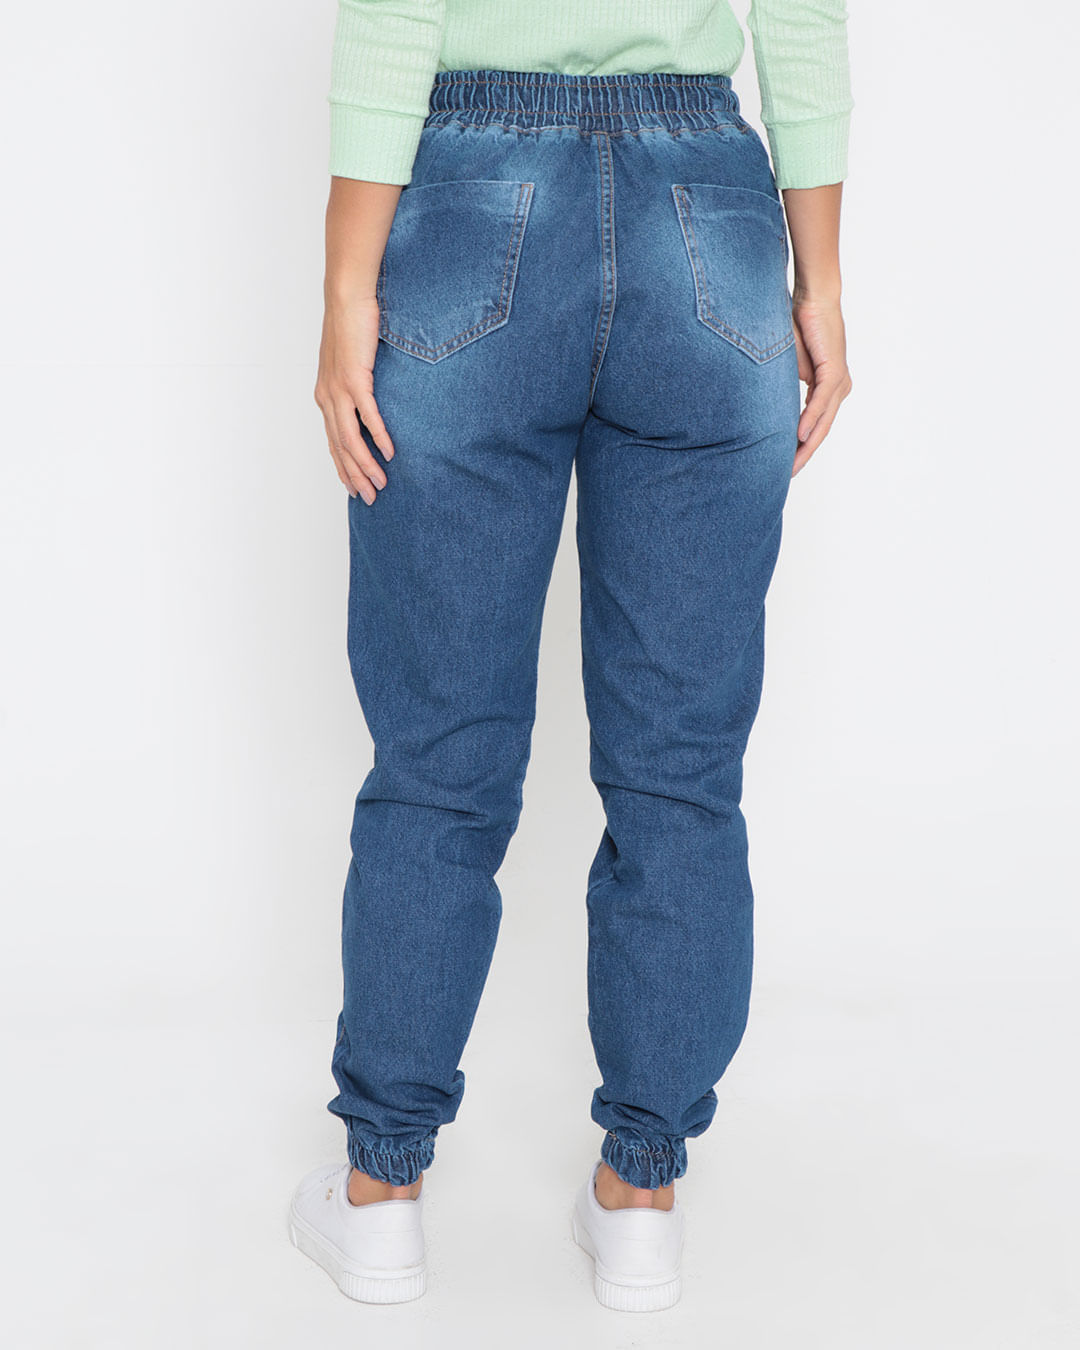 Calca-Jeans-Feminina-Destroyed-Jogger-Azul